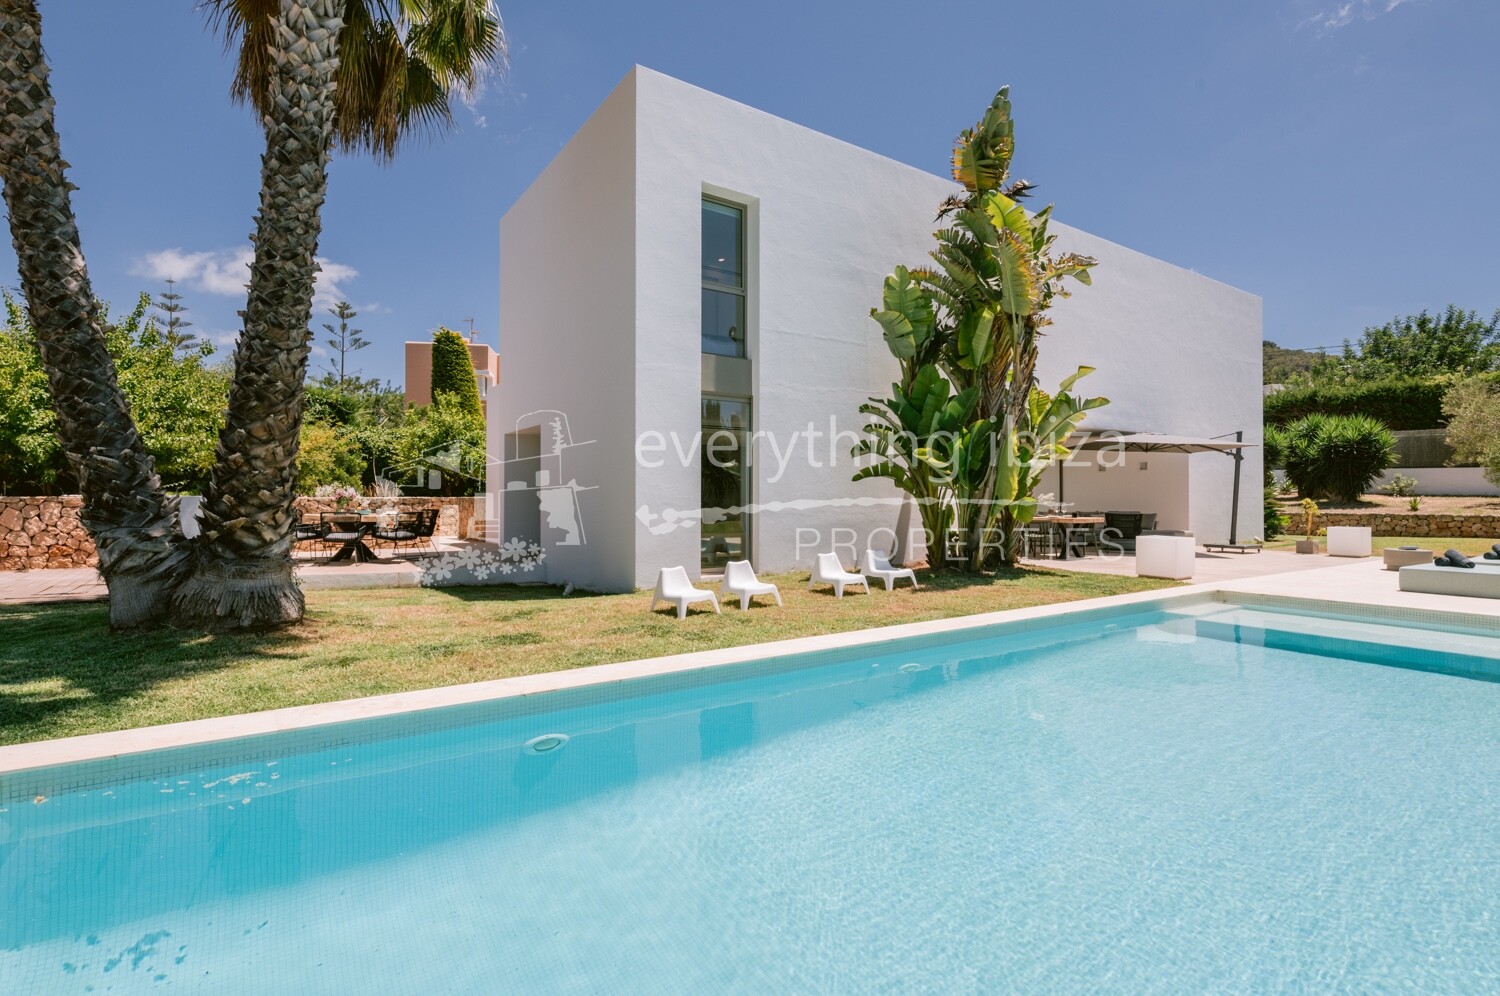 Cosmopolitan Luxury Detached Villa Close to Jesus Village, ref. 1617, for sale in Ibiza by everything ibiza Properties